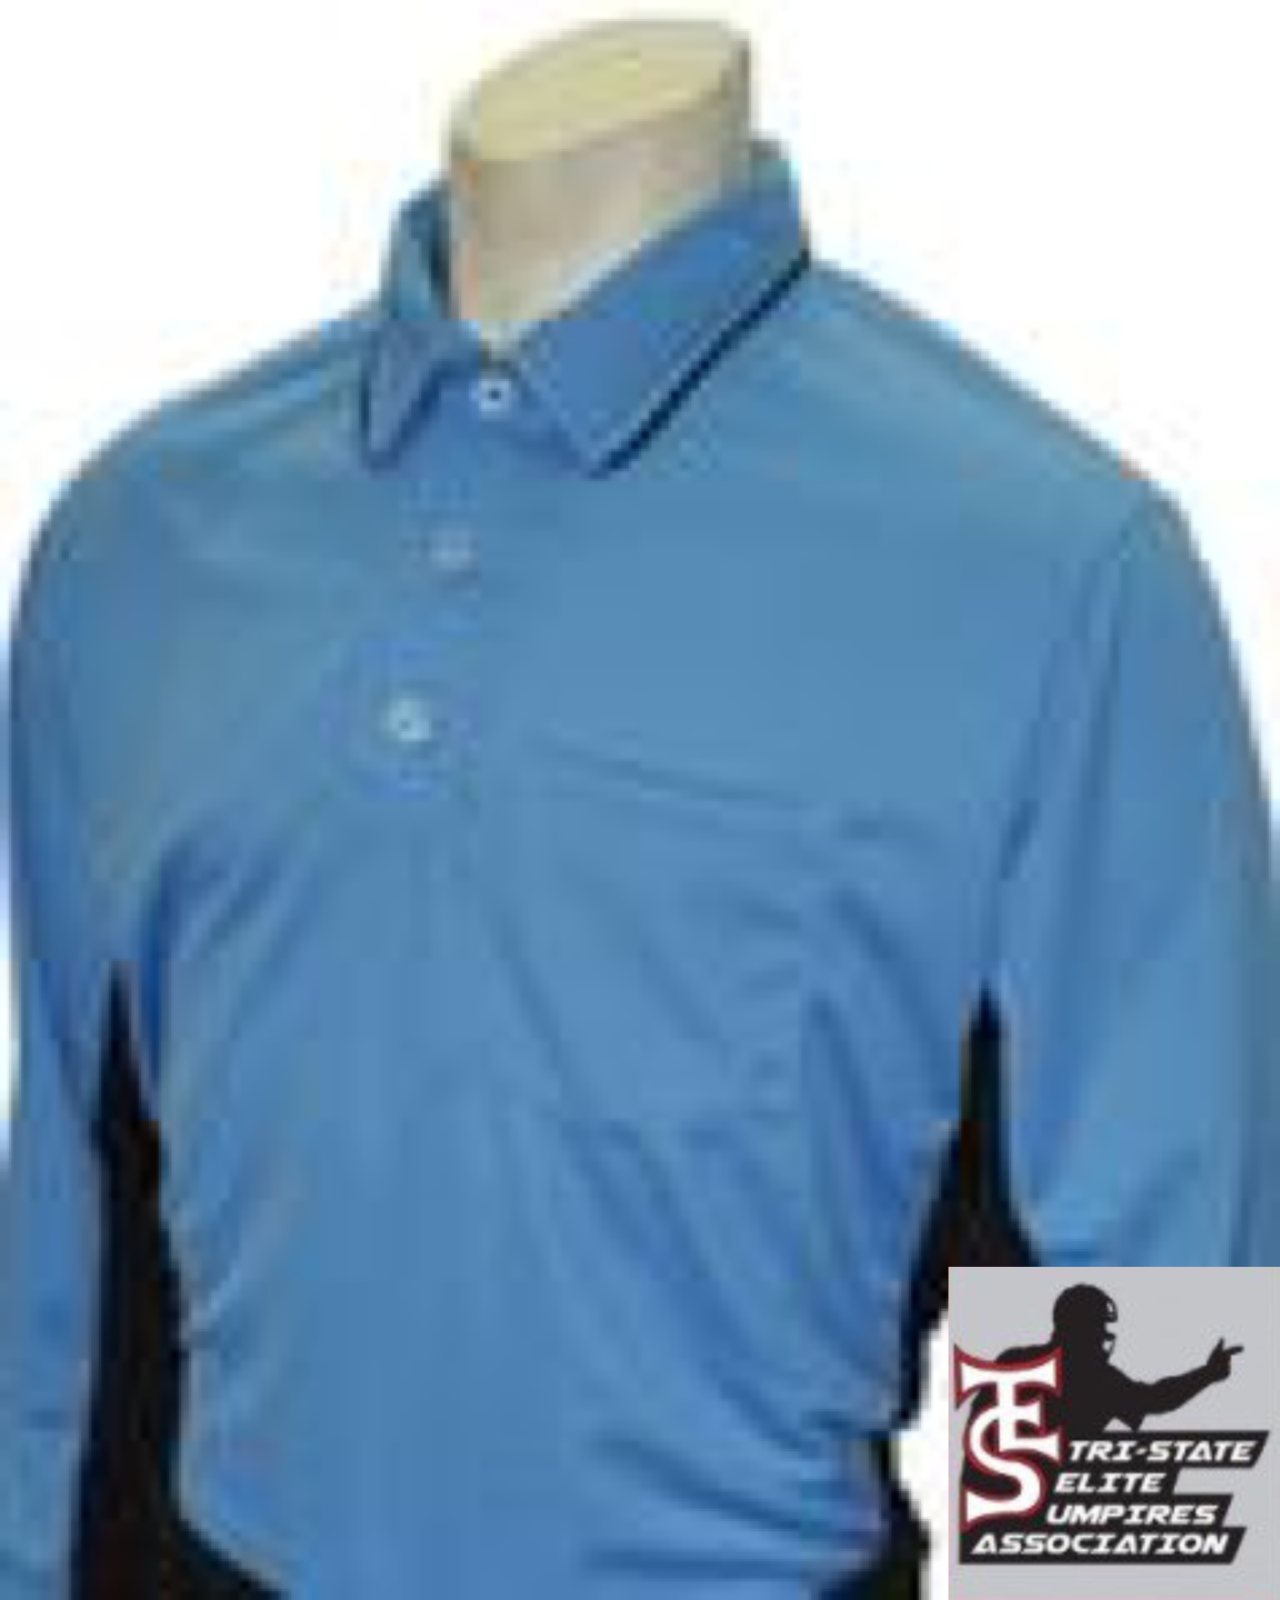 Referee Store | Smitty MLB Black Umpire Shirt w/Grey Side Panel Black Large